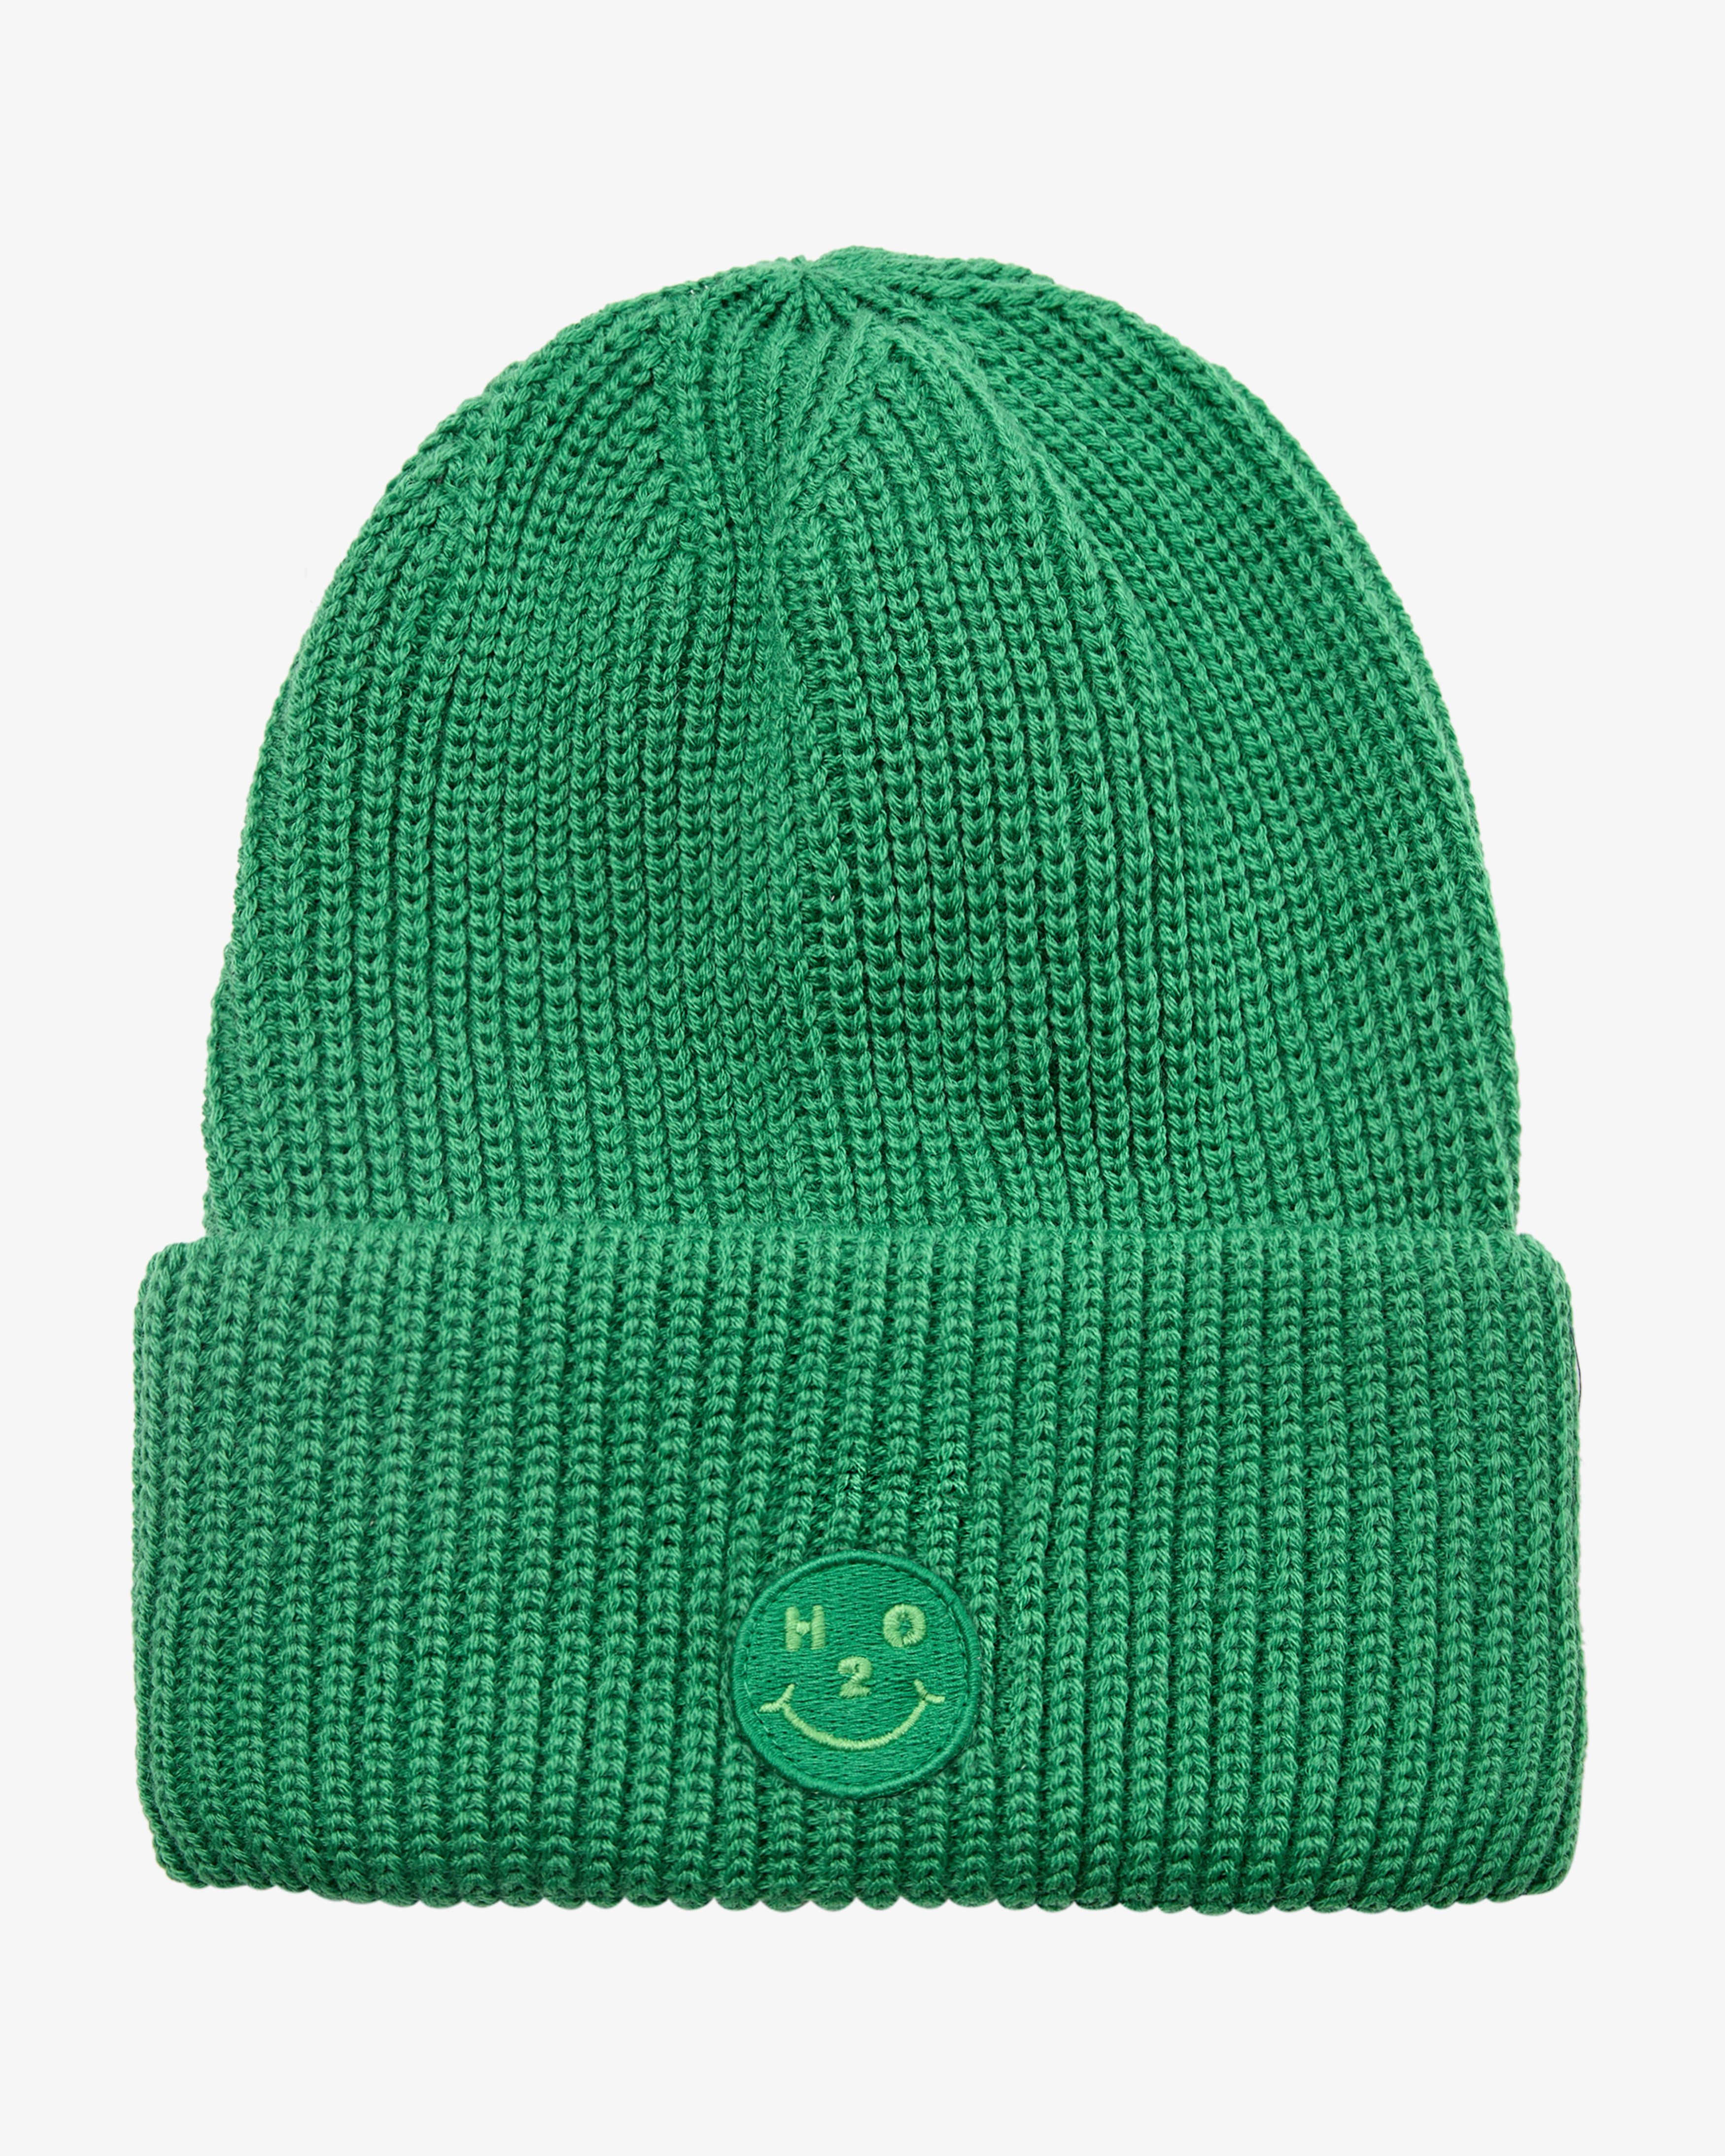 Happy Hat - Light Green